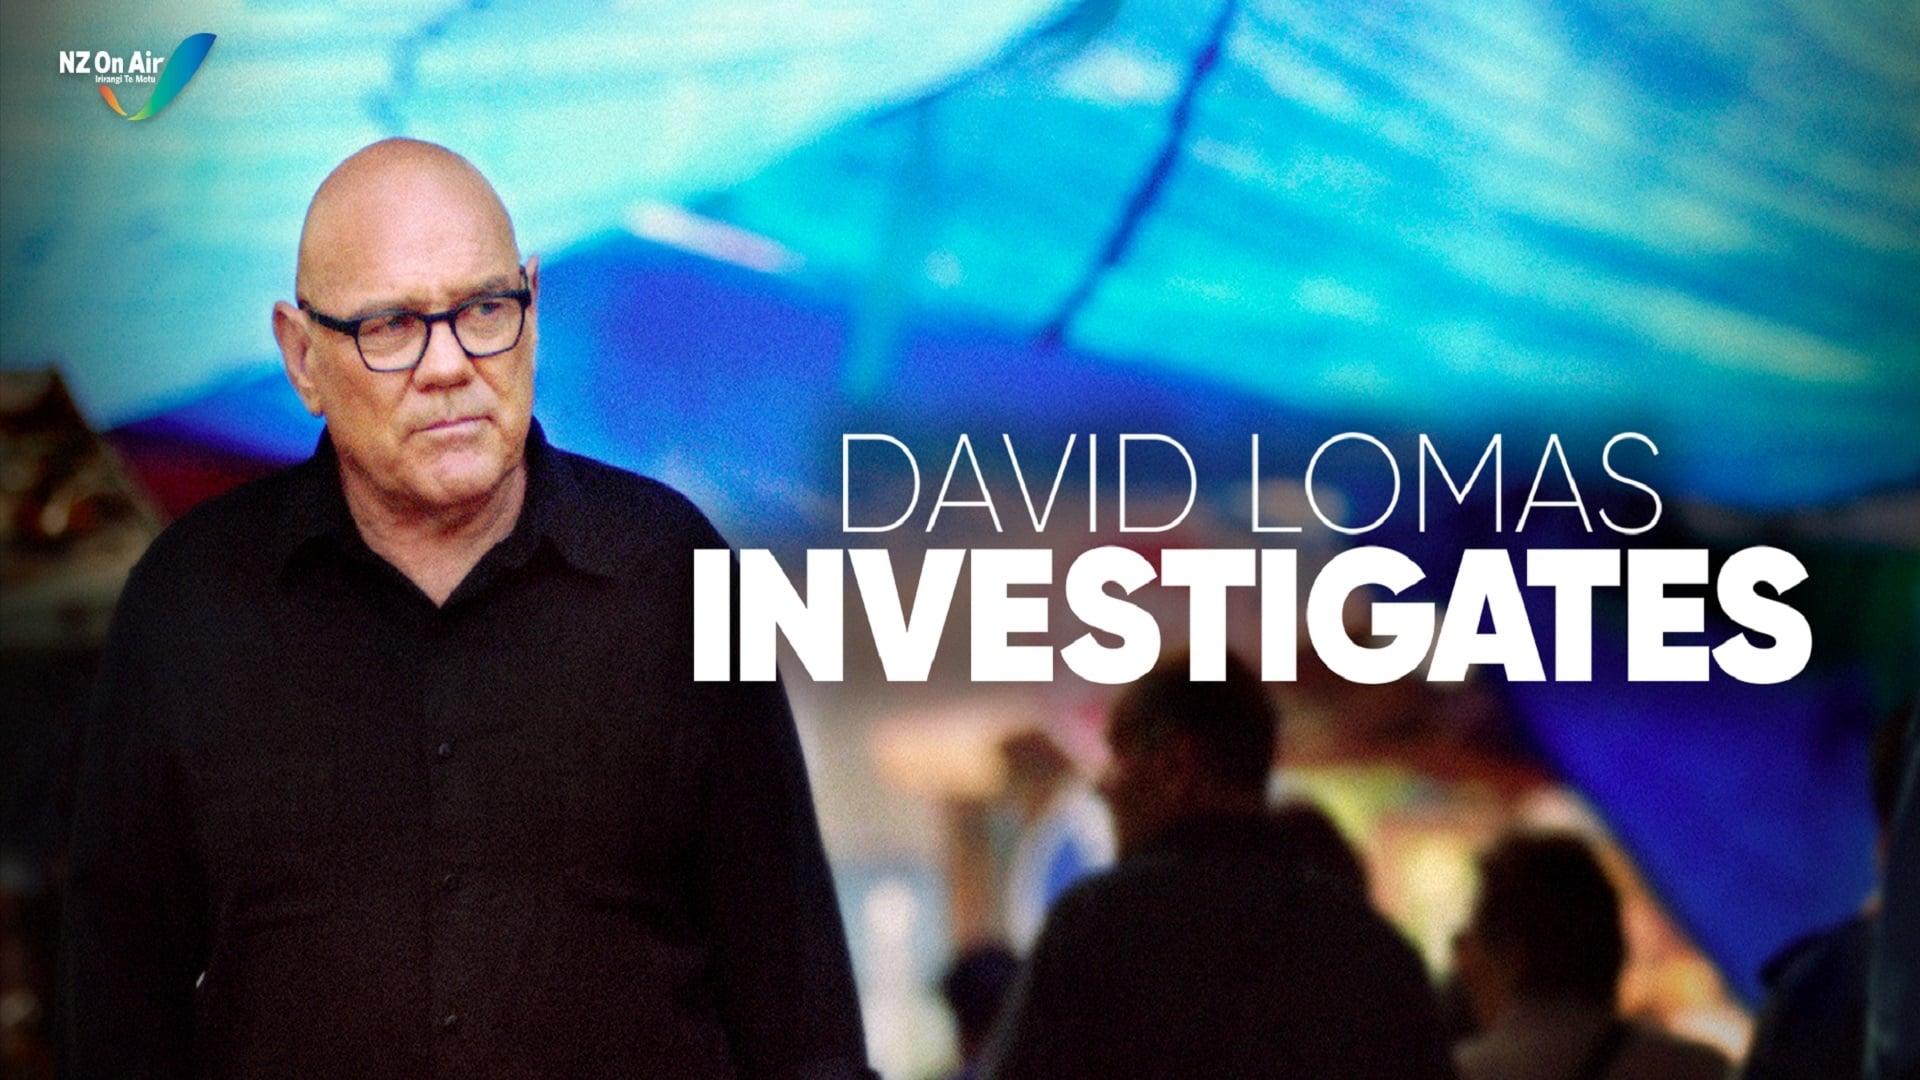 David Lomas Investigates backdrop